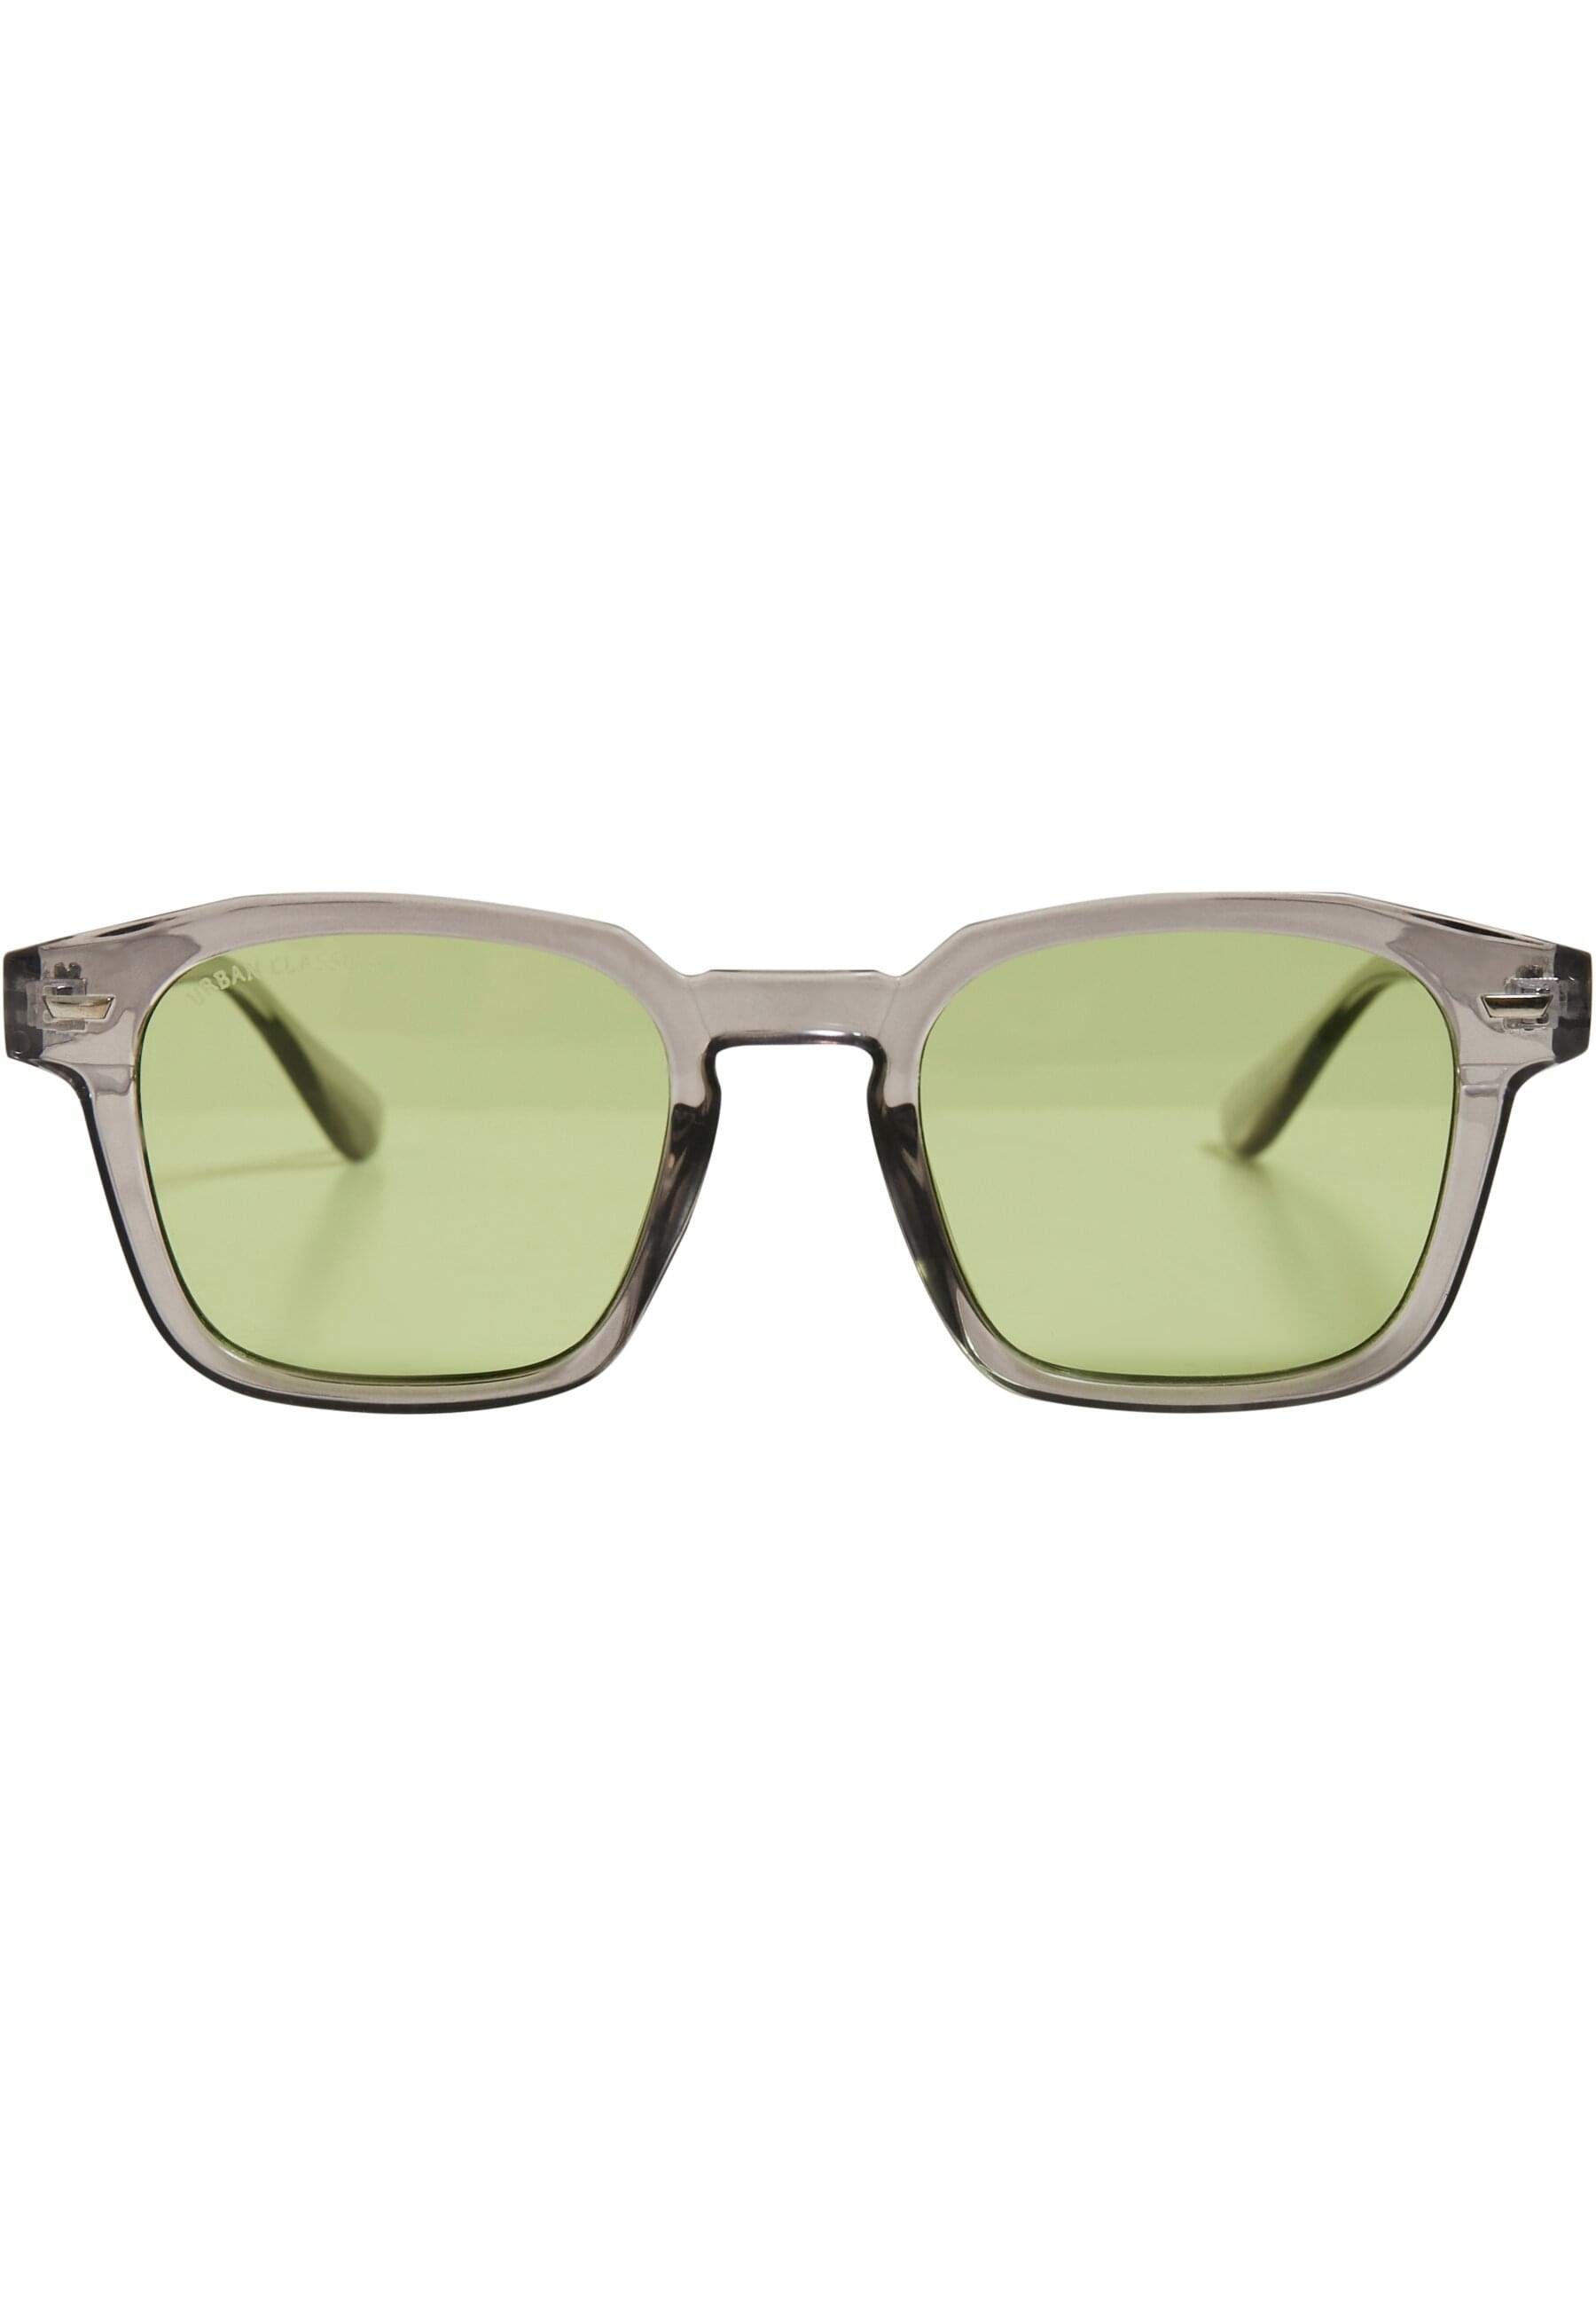 URBAN CLASSICS Sonnenbrille Unisex Sunglasses Case With Maui grey/yellow